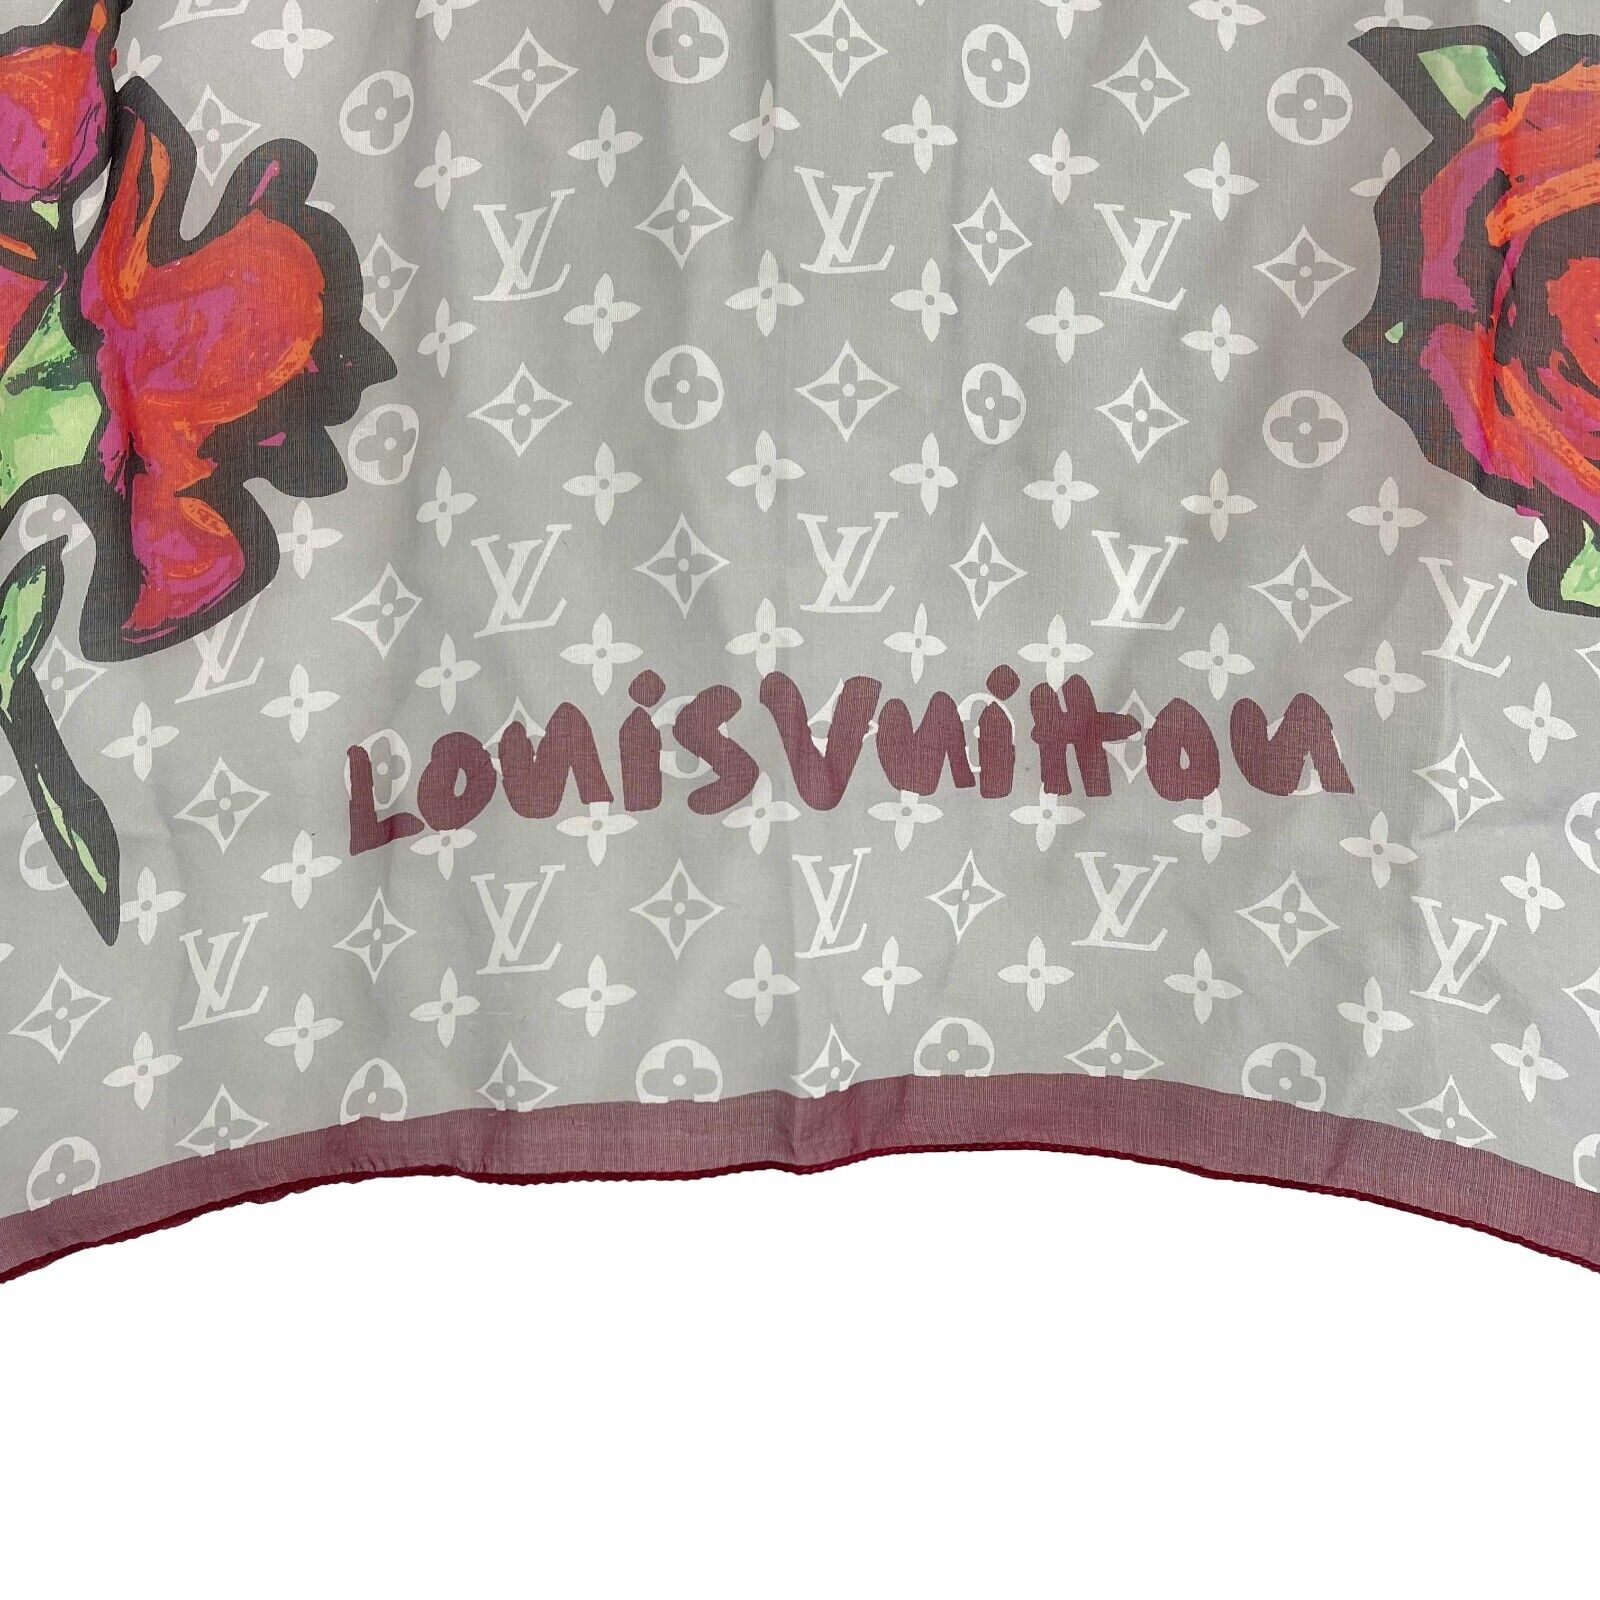 Louis Vuitton scarf <3